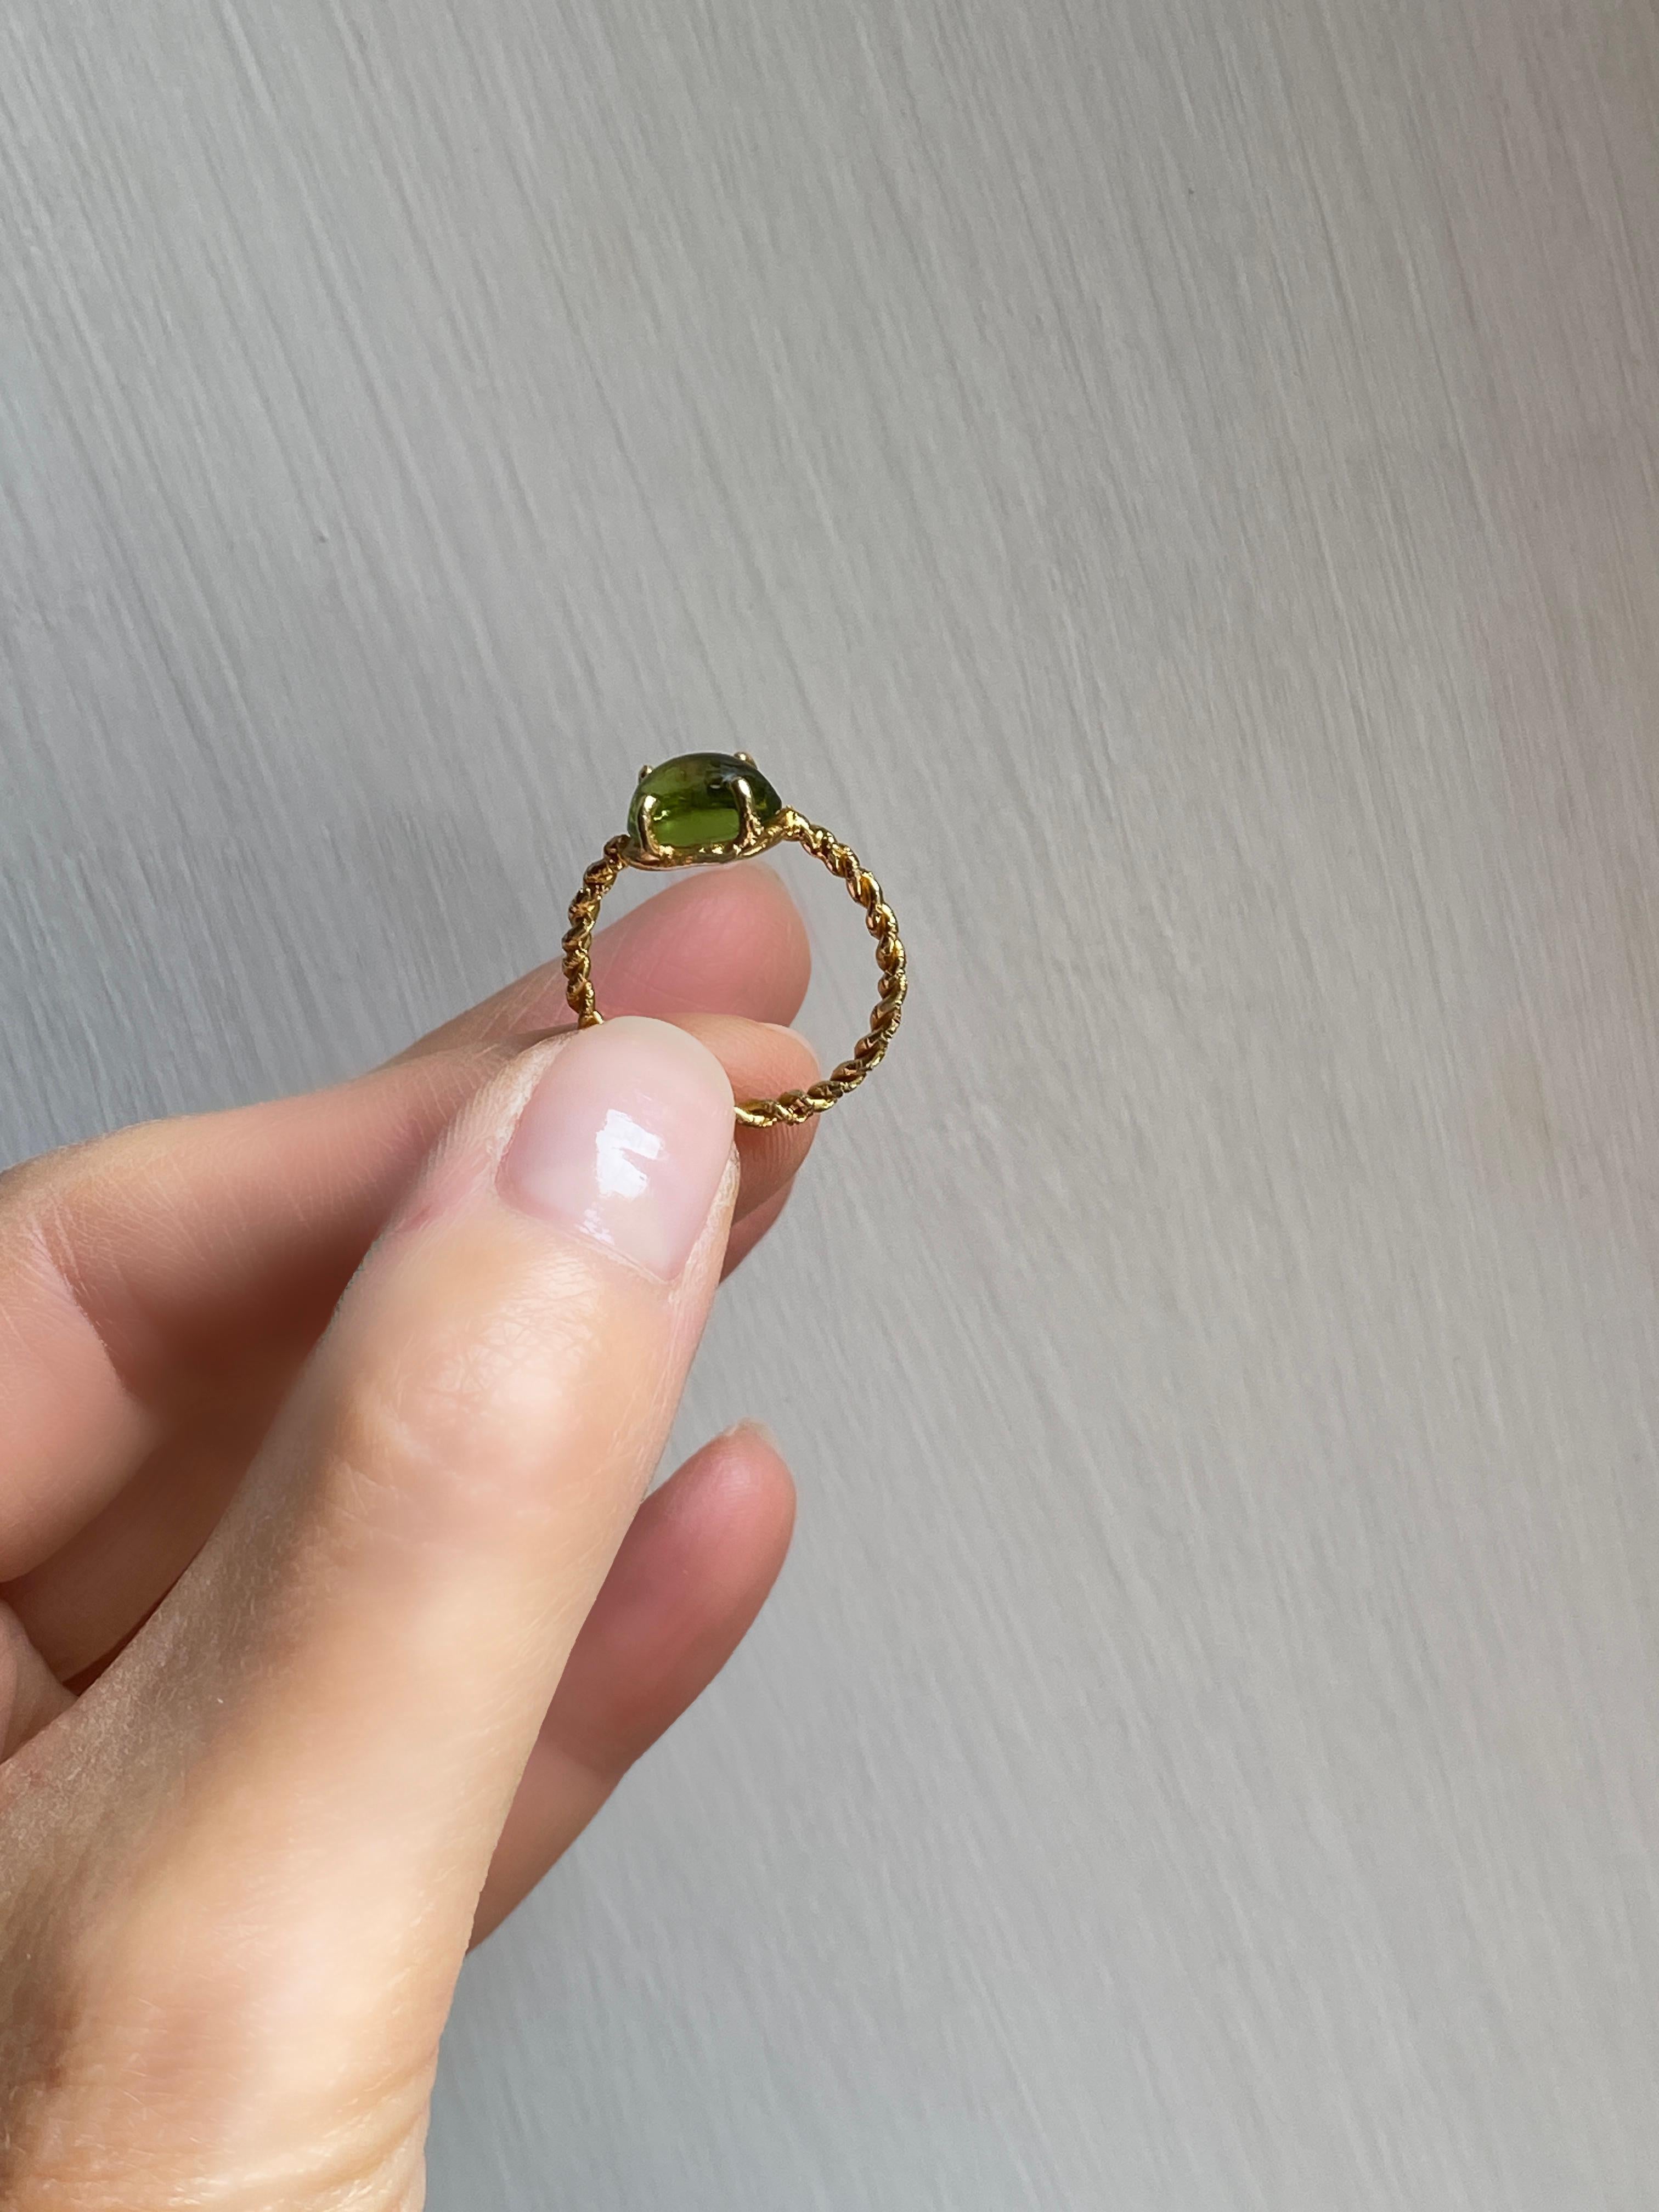 Rossella Ugolini 18K Yellow Gold Delicate Unique Peridot Ring Nature Inspired For Sale 2